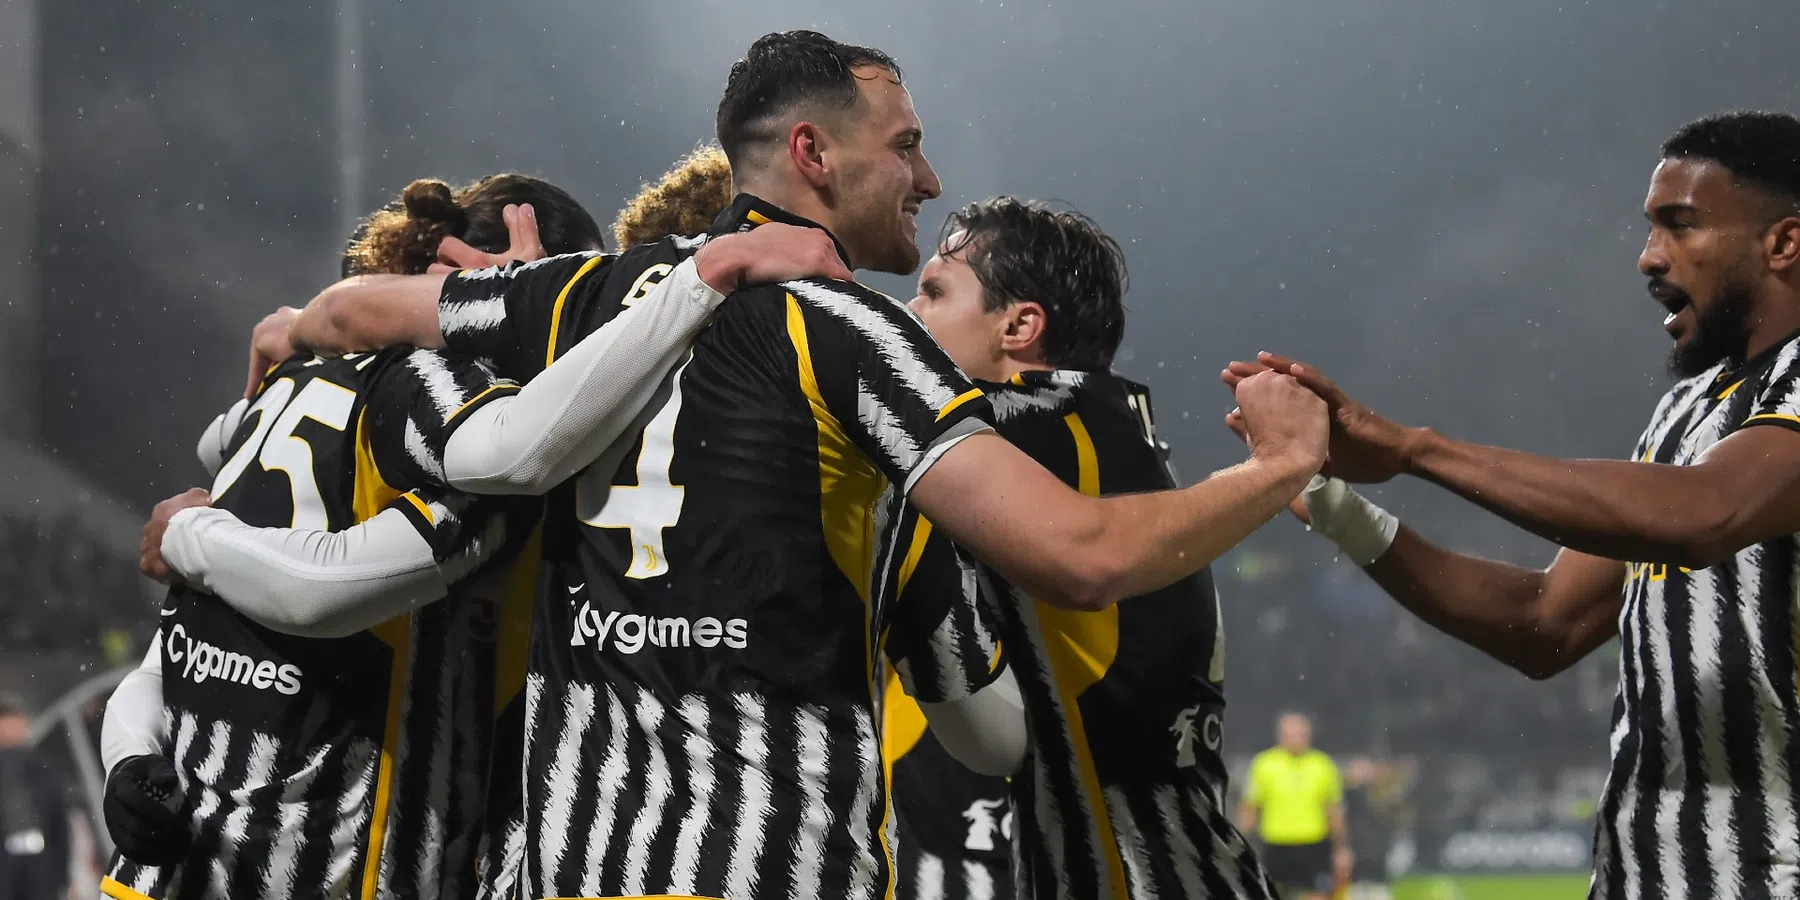 Wedstrijdverslag AC Monza - Juventus